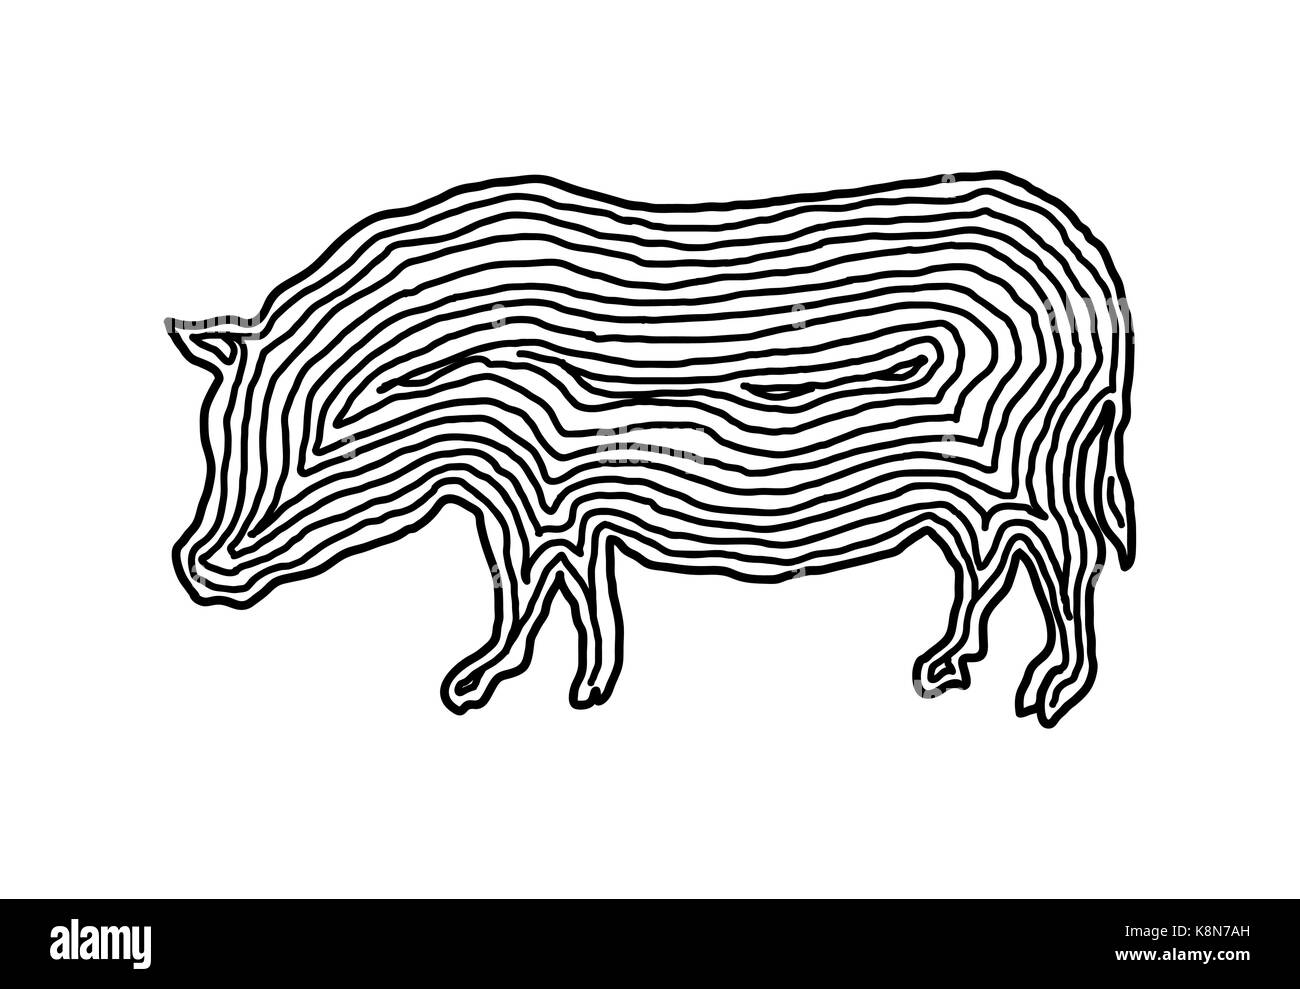 A pig illustration icon in black offset line. Fingerprint style for logo or background design. Stock Vector